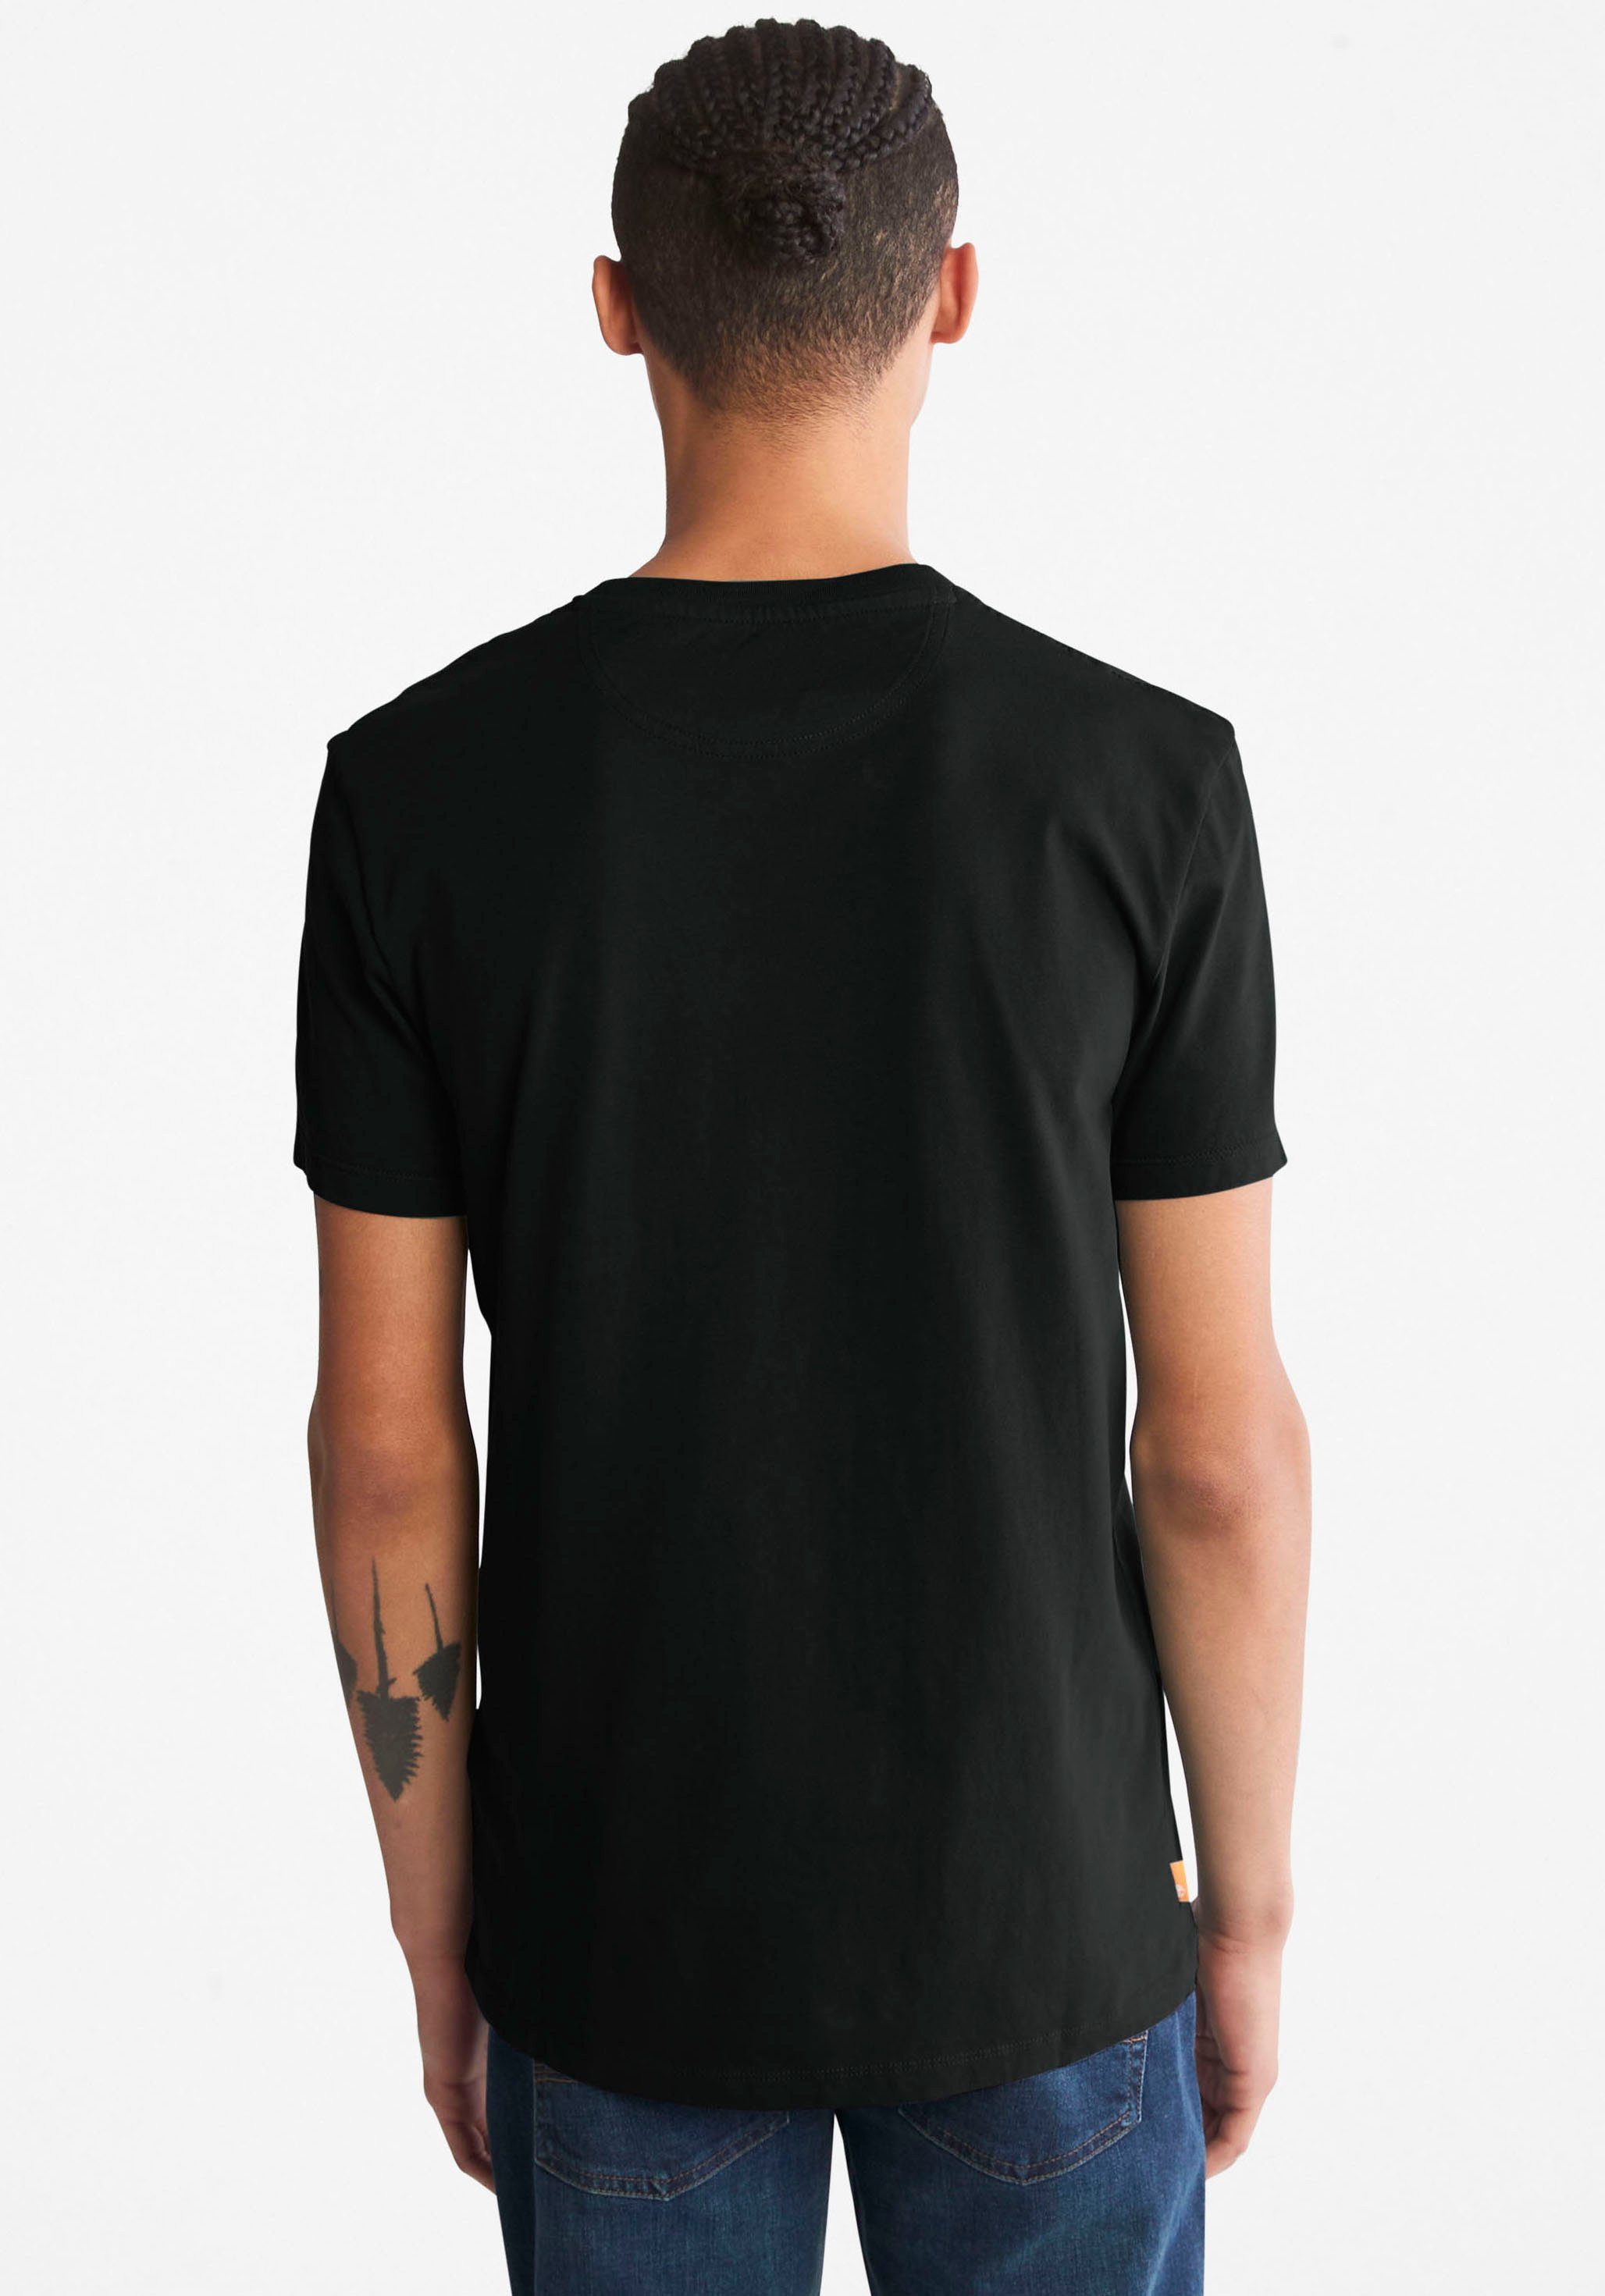 Timberland TEE DUNSTAN T-Shirt POCKET RIVER black